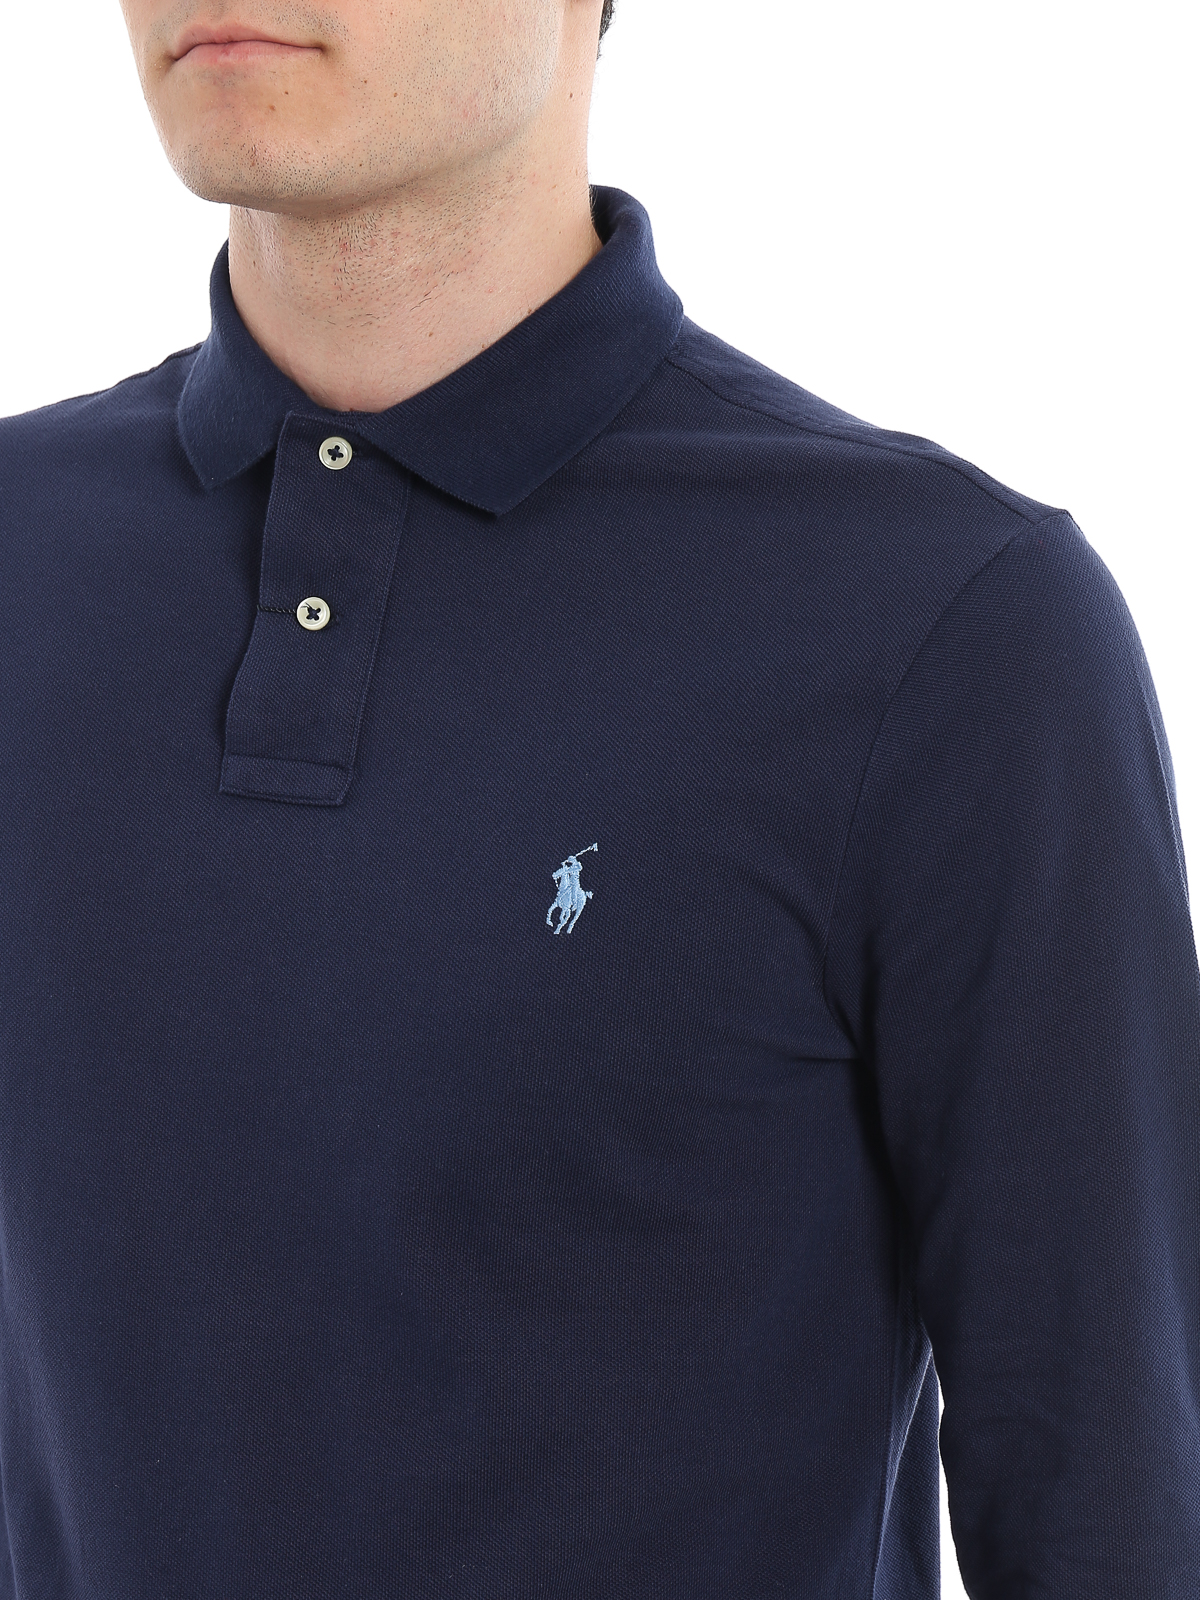 Download Polo Ralph Lauren - Blue navy cotton long sleeve polo ...